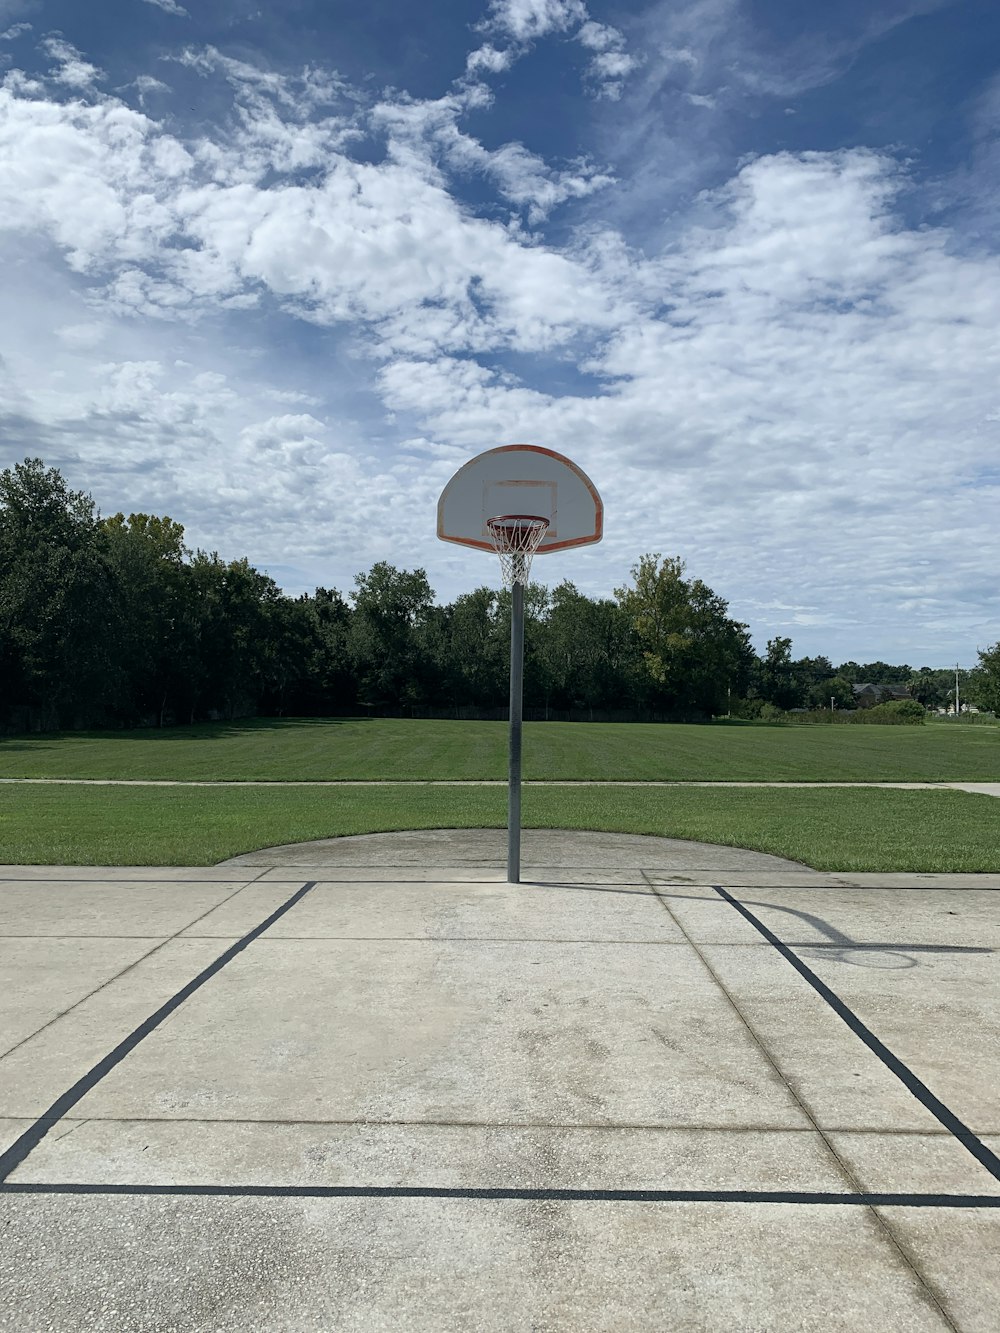 basketball hoop on green grass field under blue sky during daytime